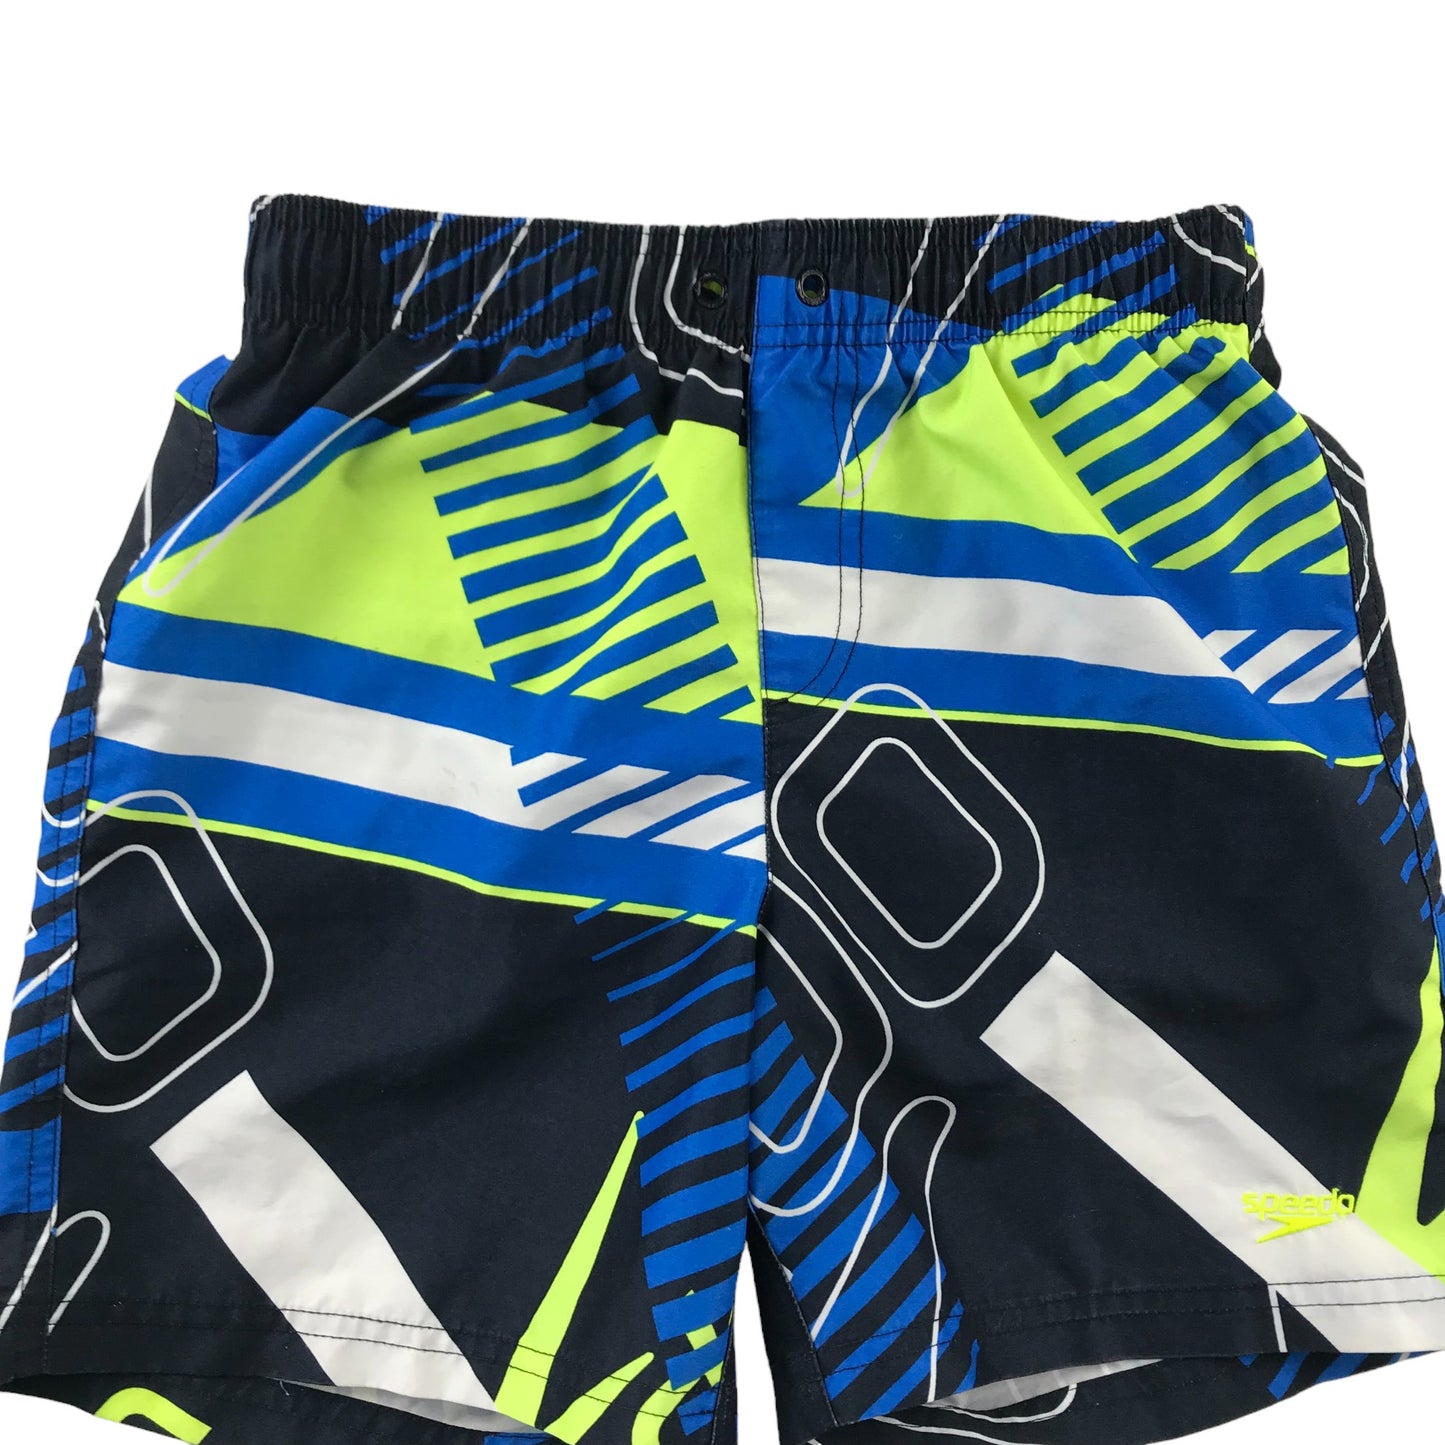 Speedo Swim Trunks Age 12-13 Navy Blue Neon Graphic Design Print Shorts